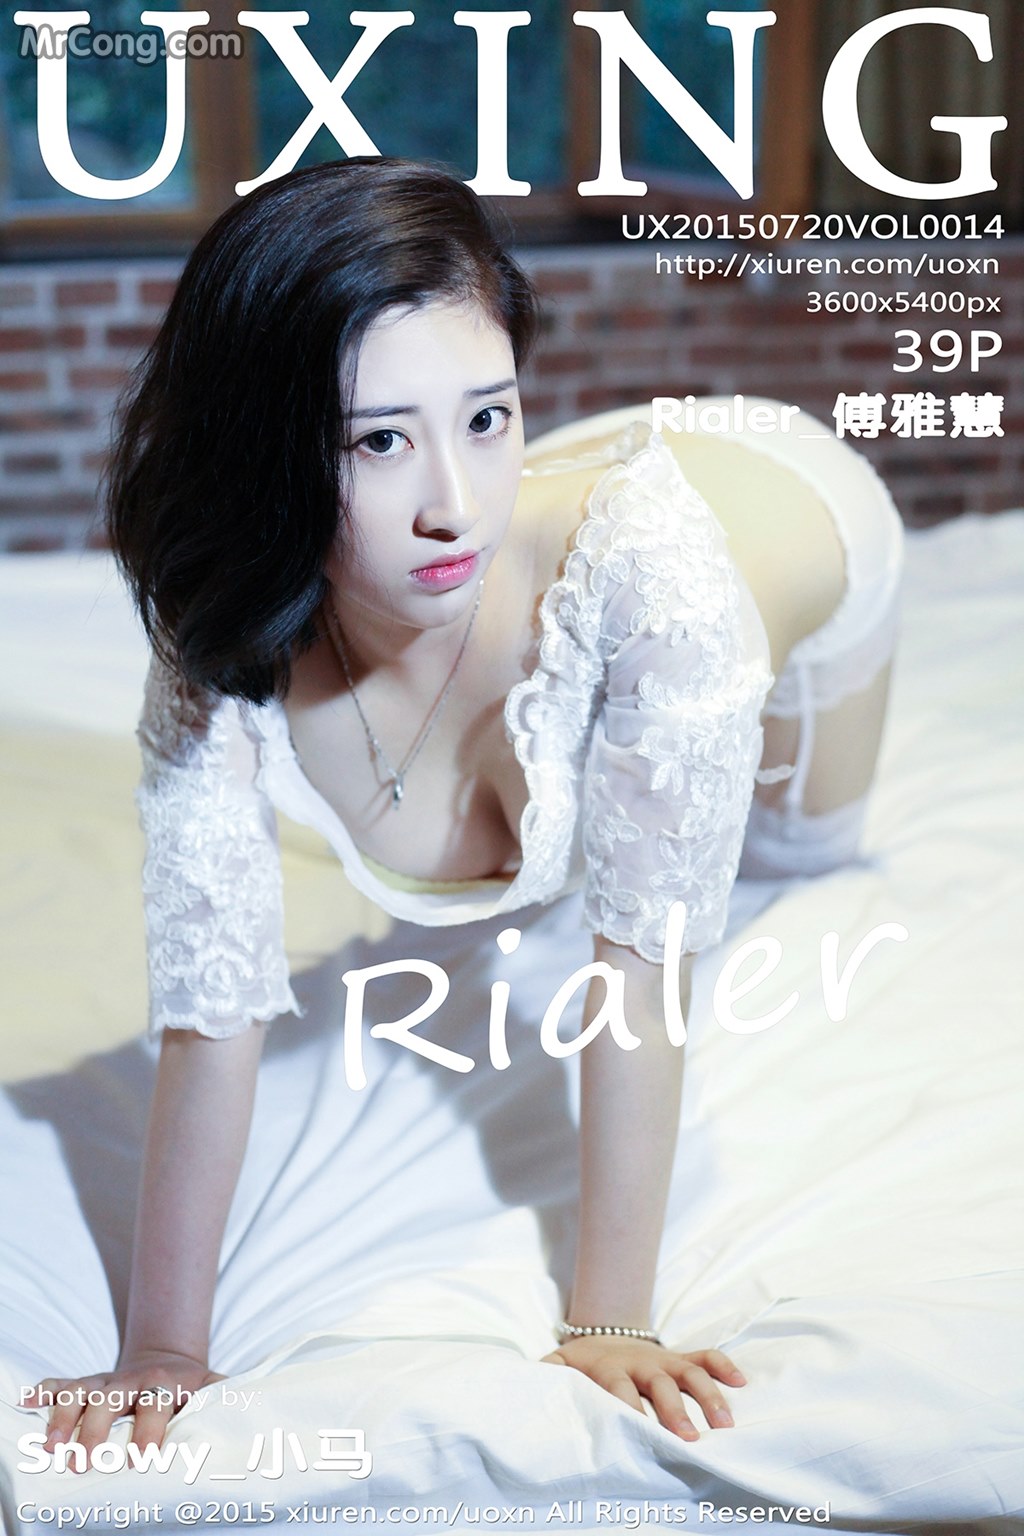 UXING Vol.014: Model Rialer (傅雅慧) (40 photos) photo 2-19